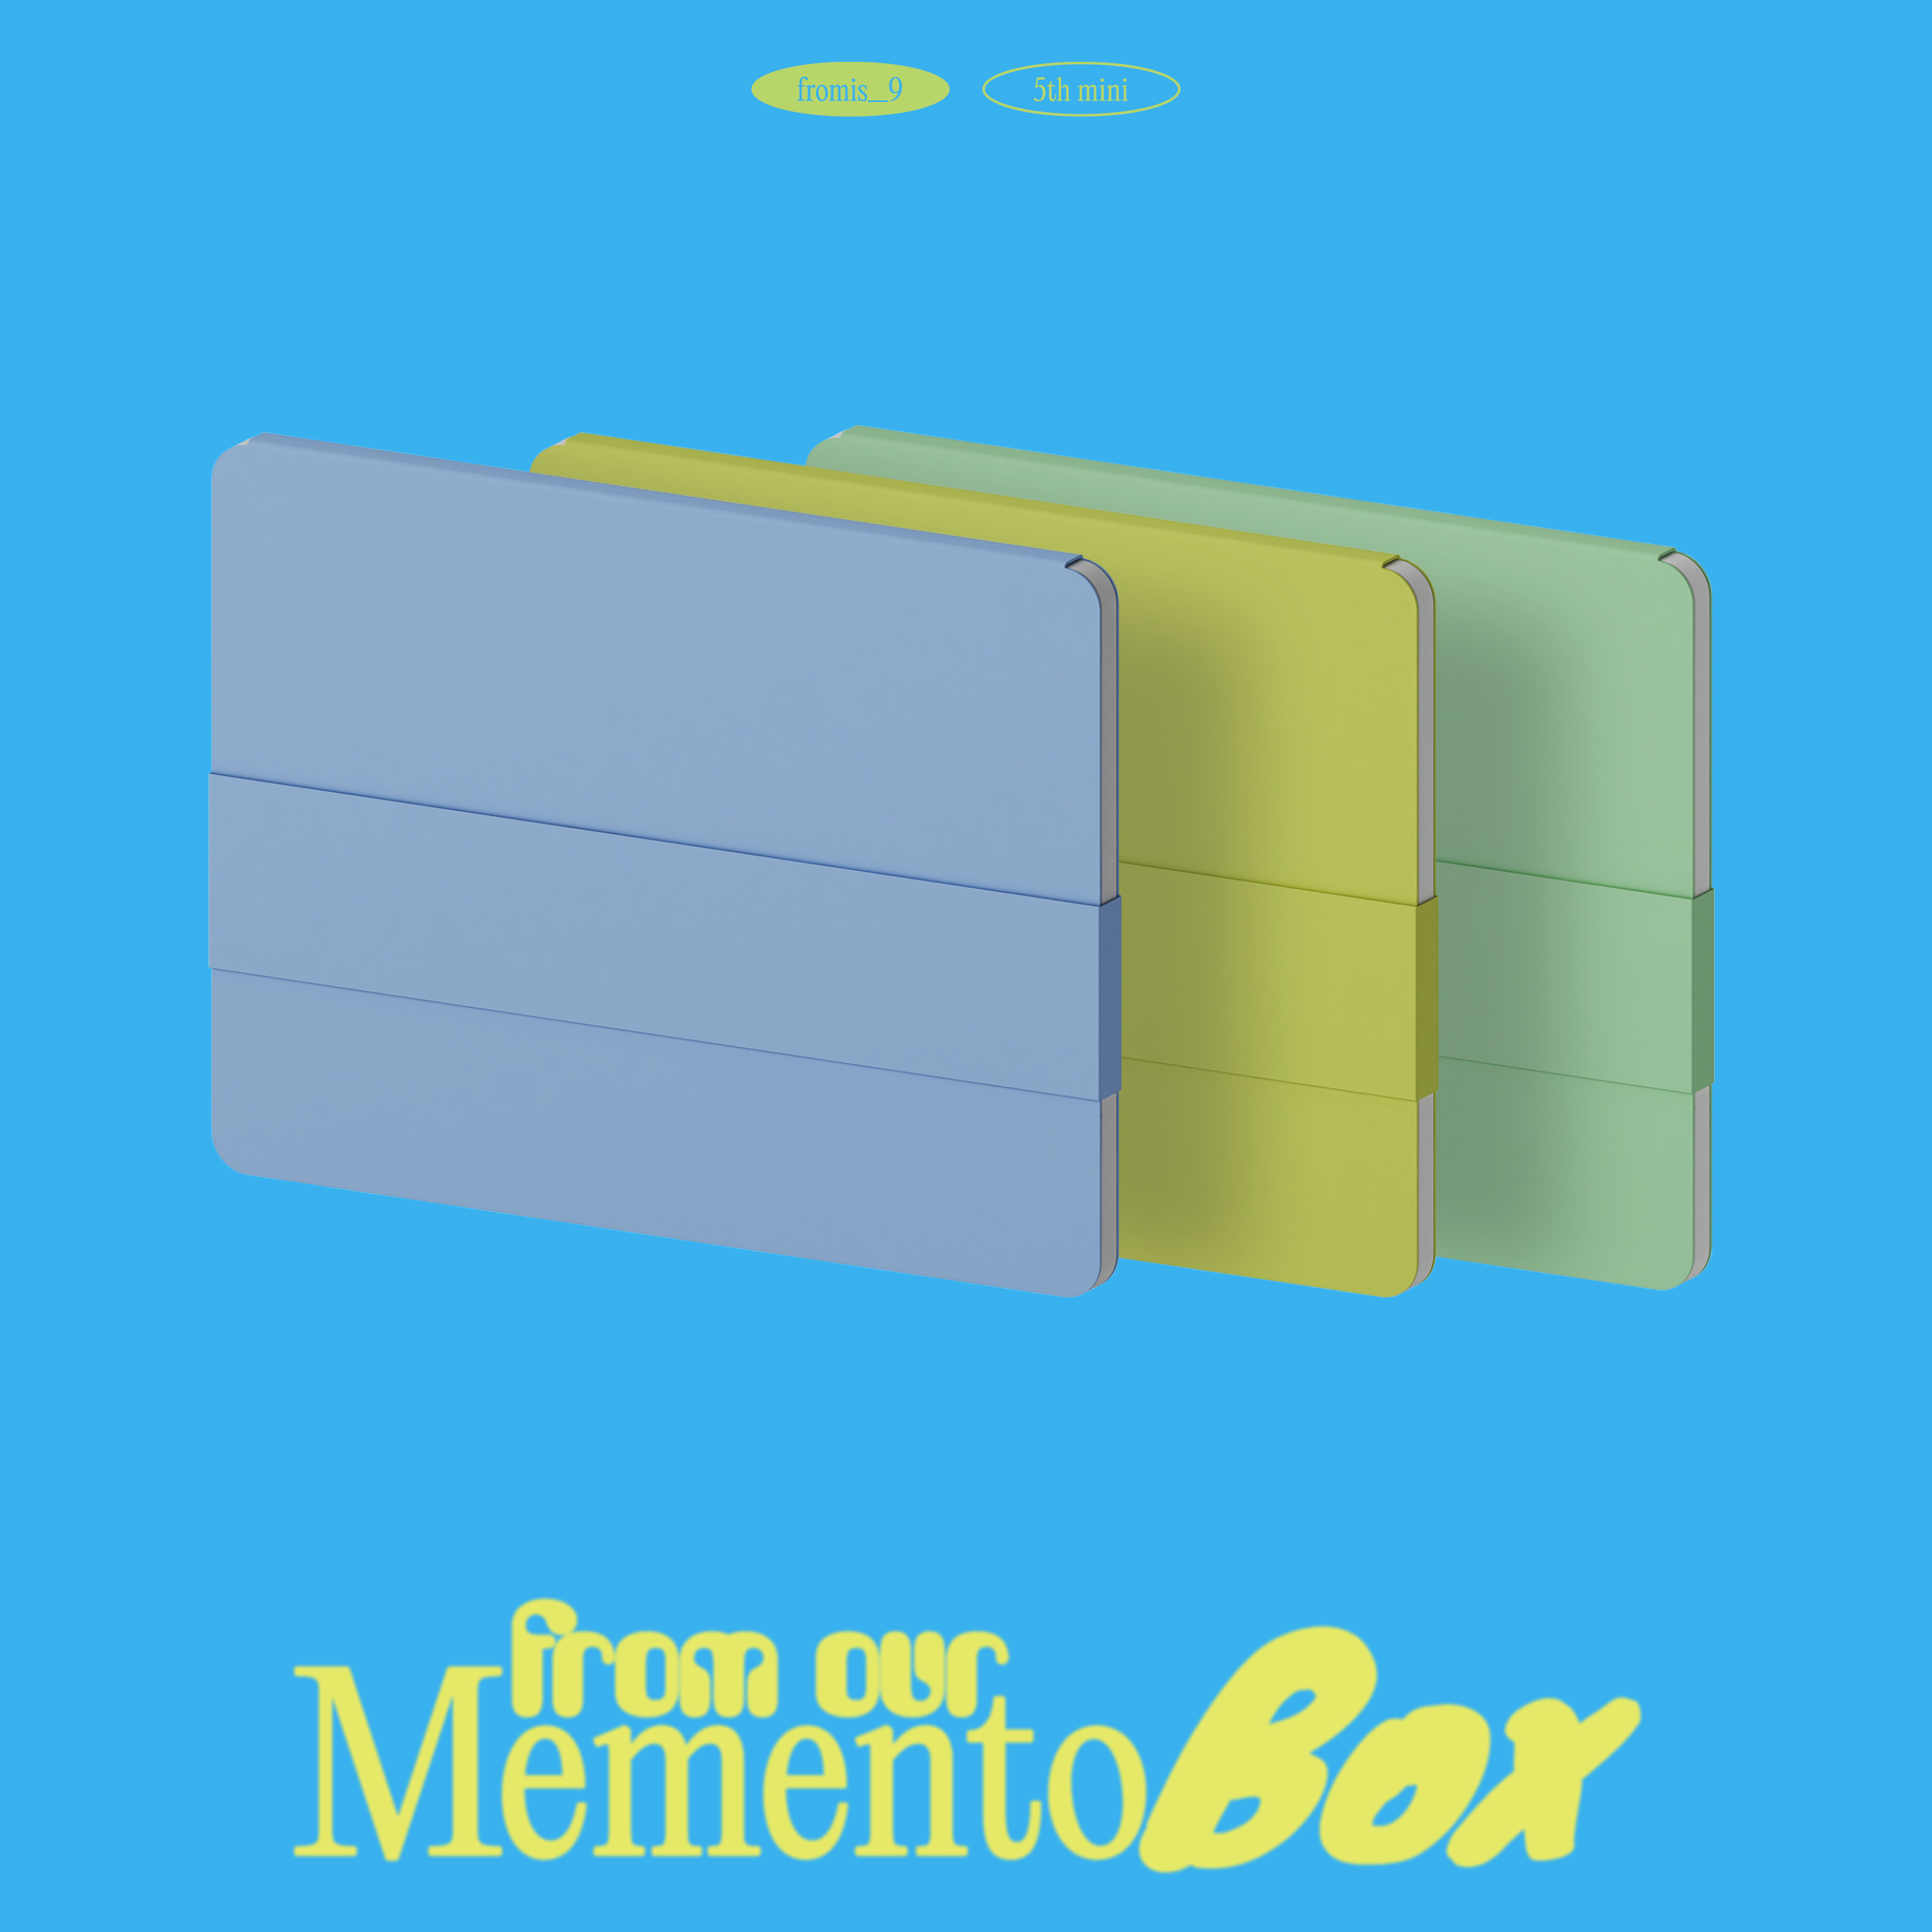 [Random] fromis_9 - 5th Mini Album [from our Memento Box]